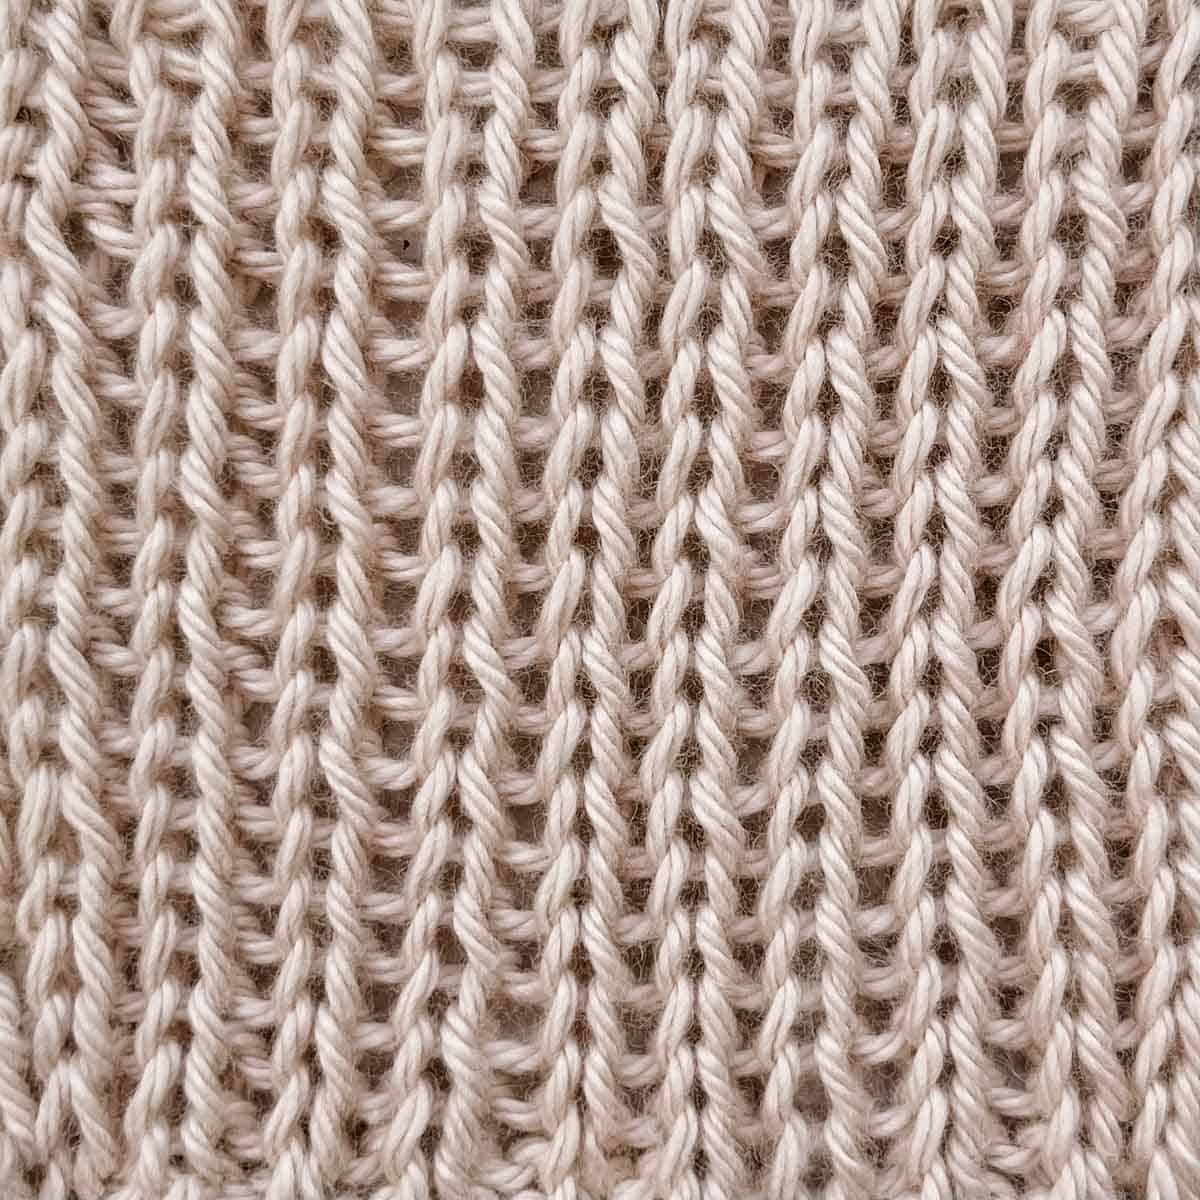 1 x 1 knit ribbing example.